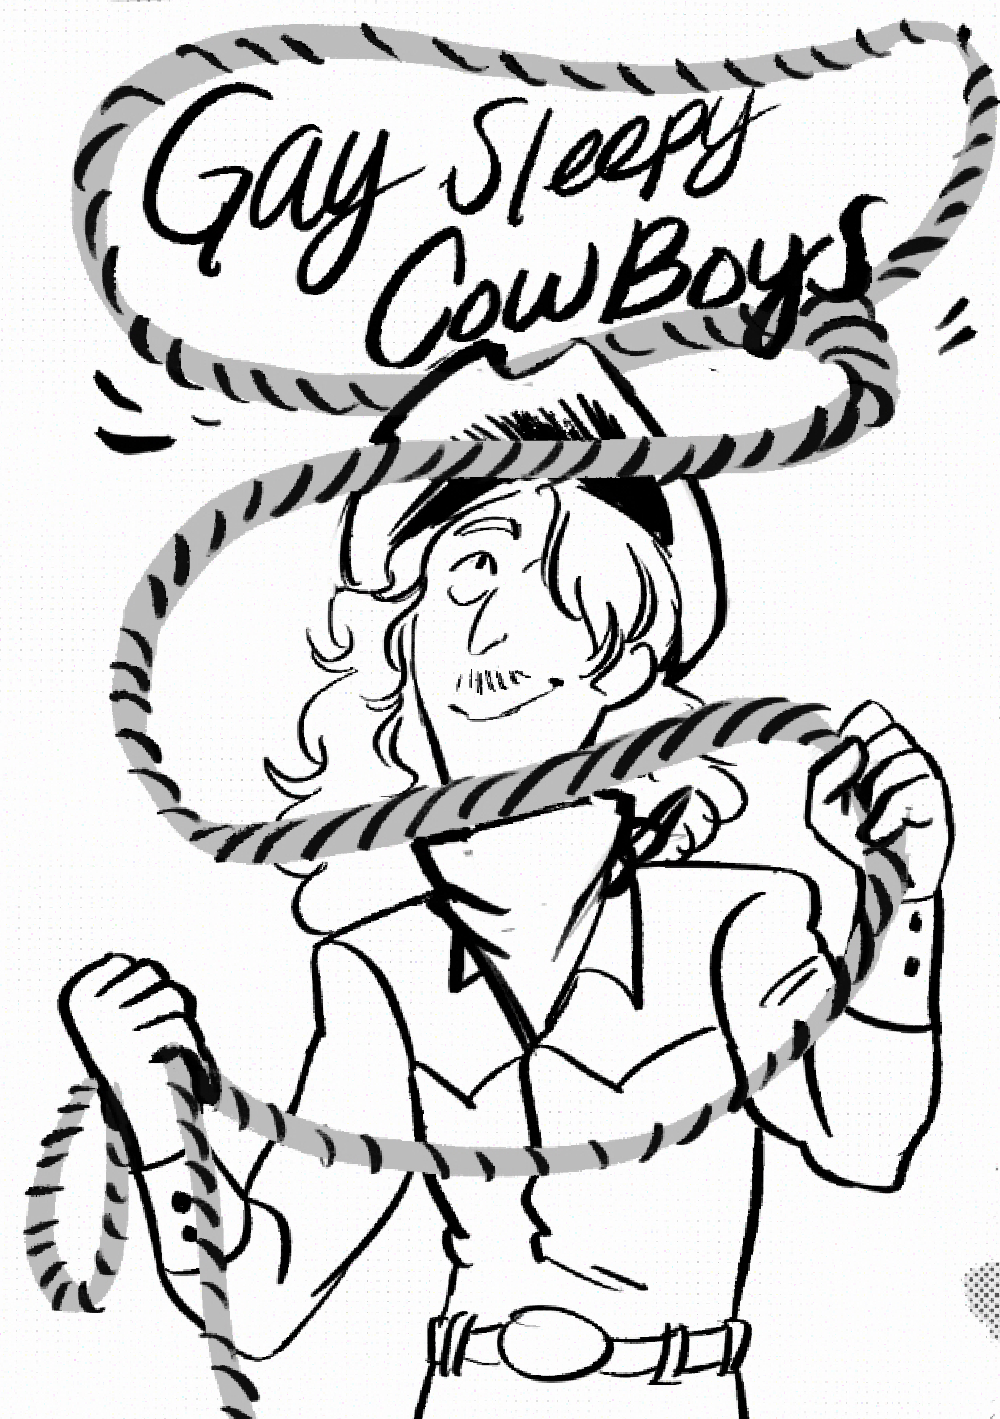 Gay Sleepy Cowboys